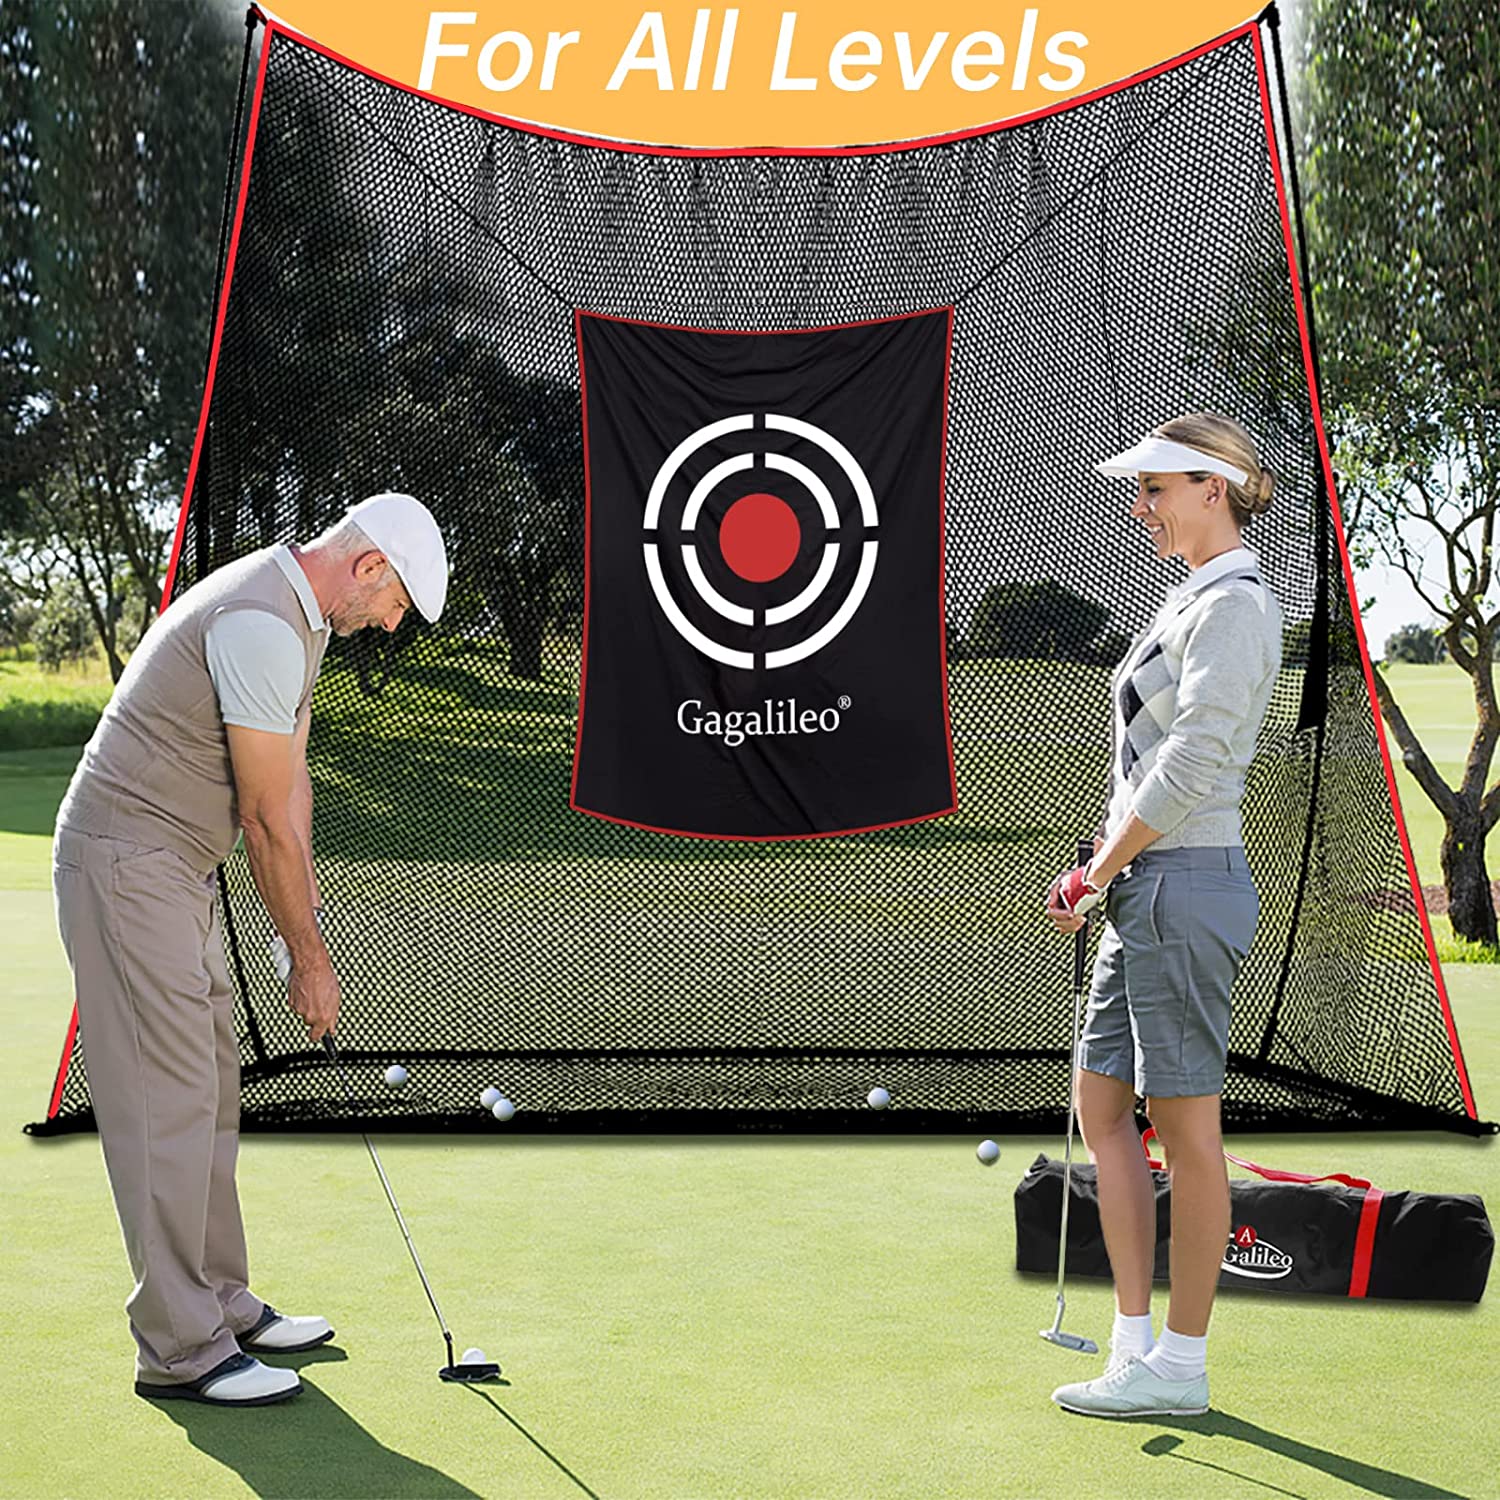 Galileo Sports Redes de práctica de golf Red de golf para campo de prácticas de golf en el patio trasero | 10'X 8'X 3' | deportes galileo